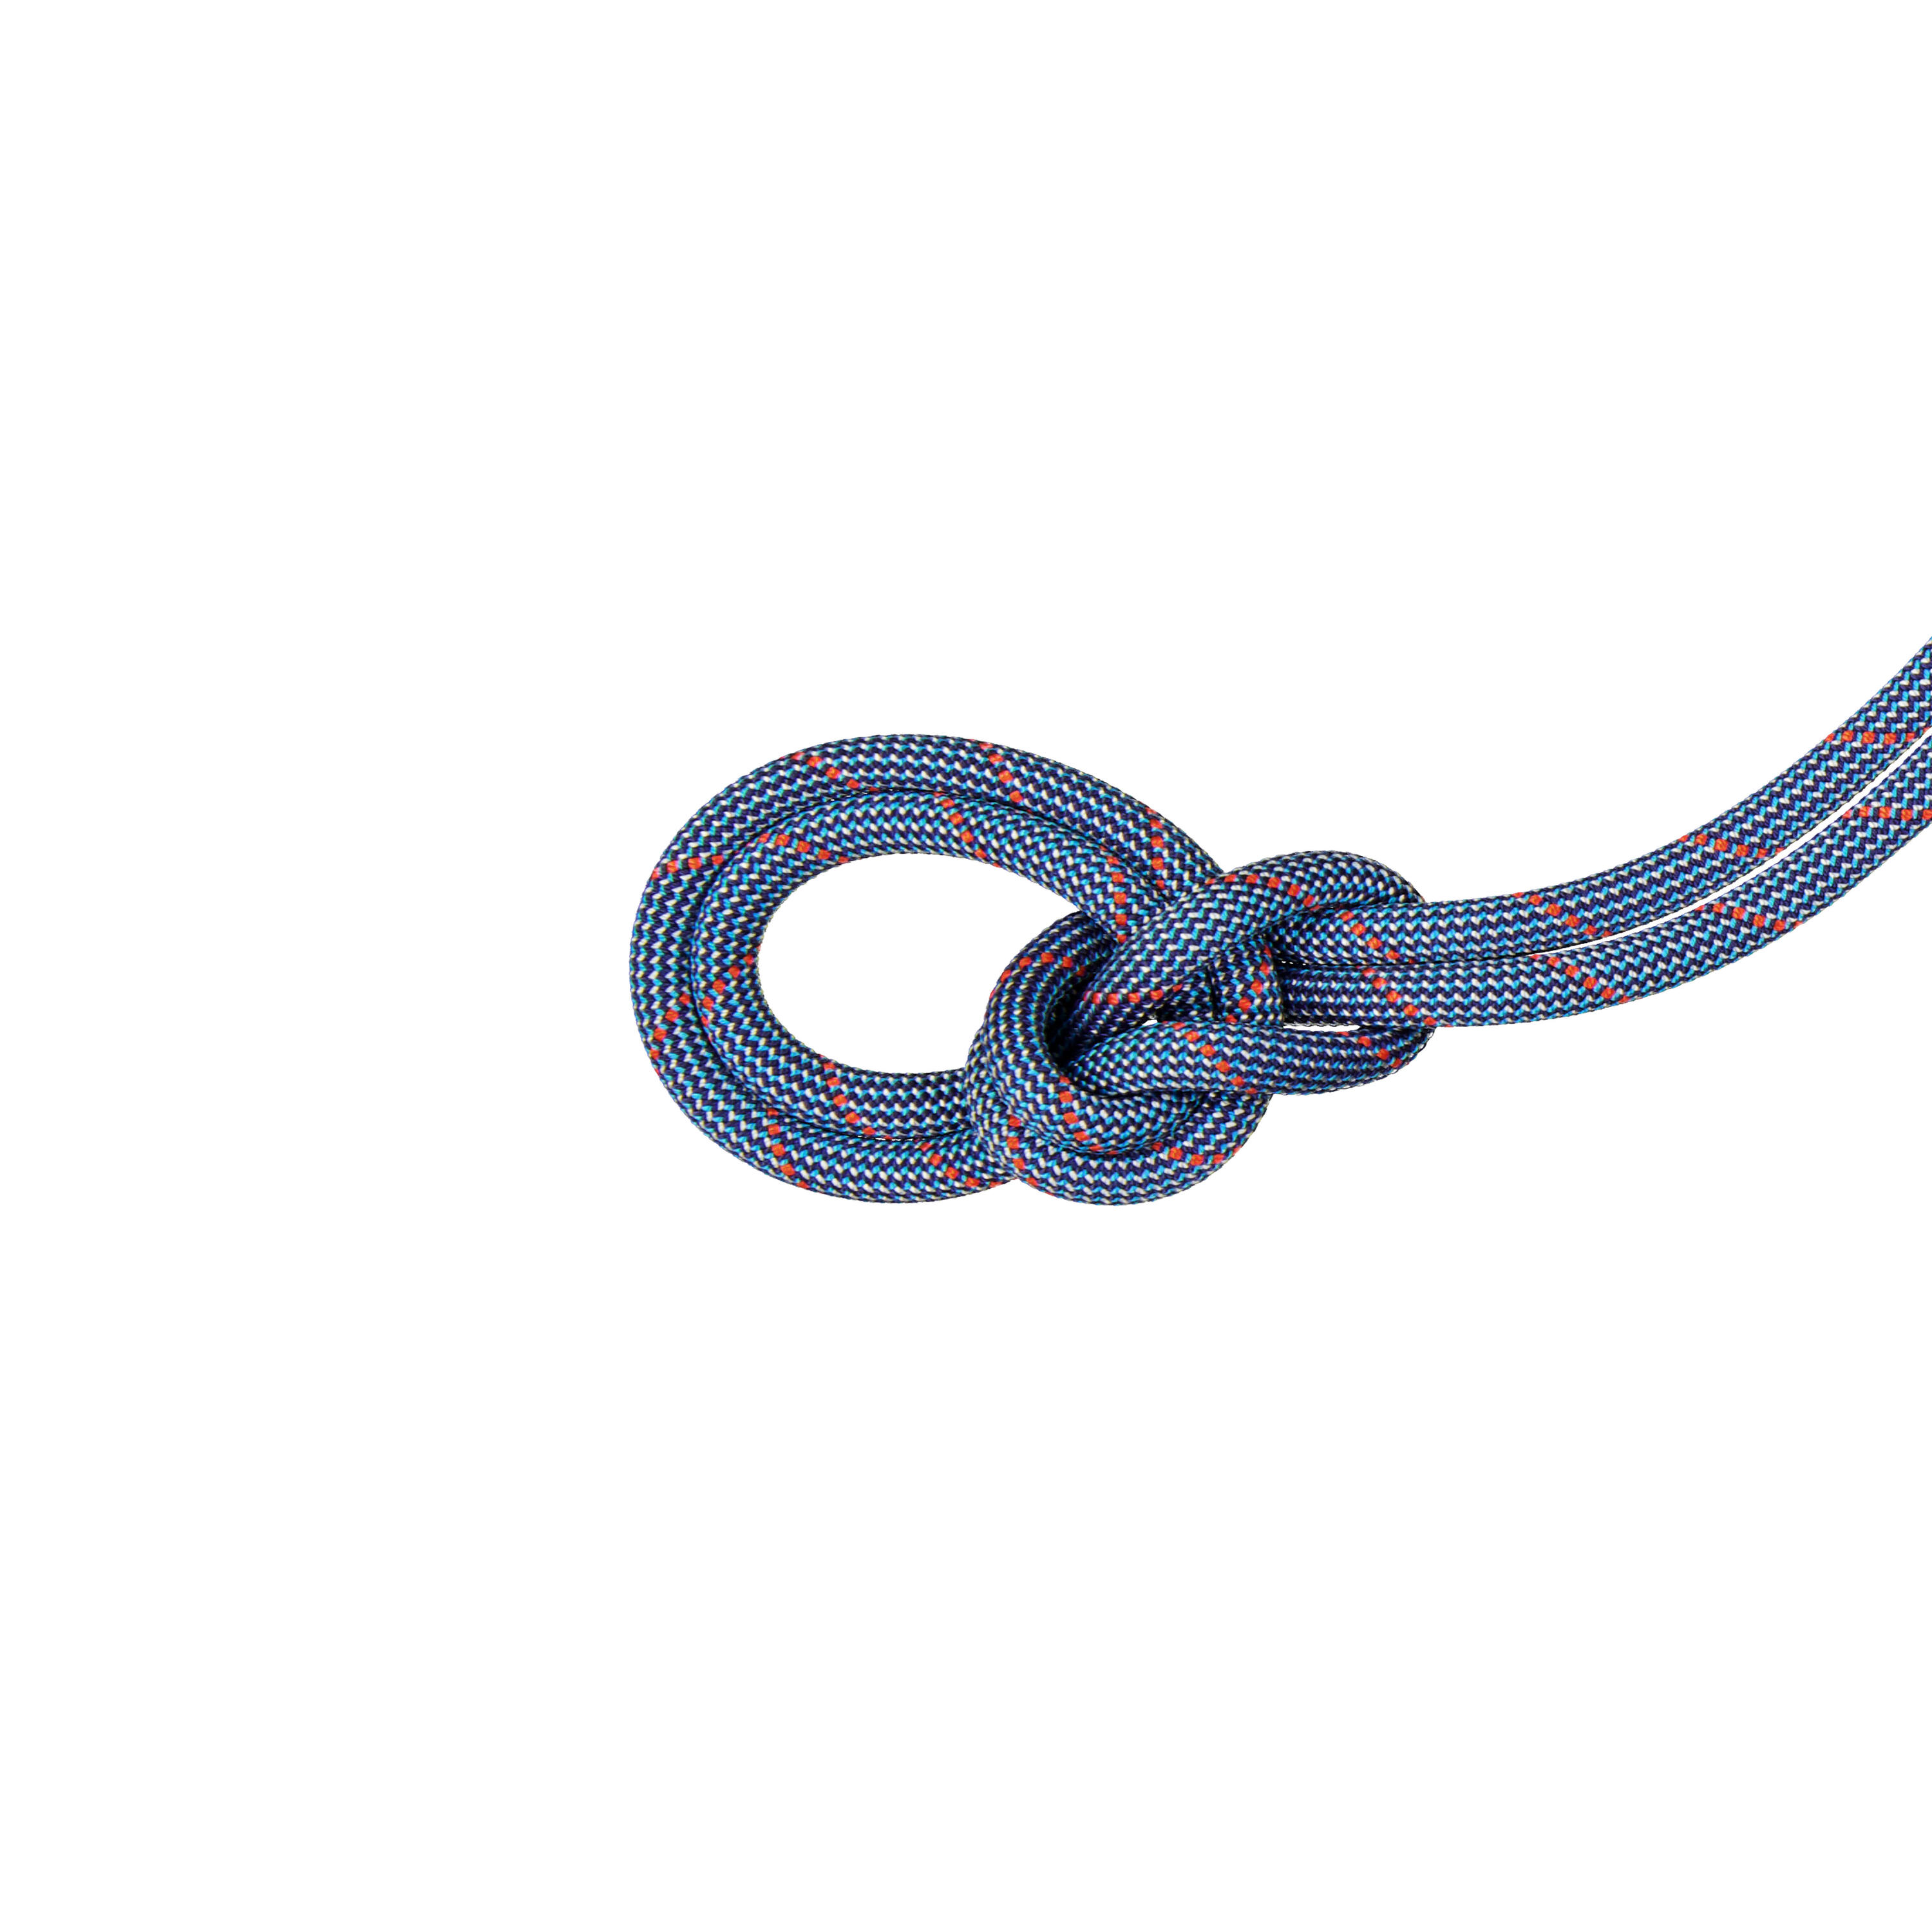 MAMMUT Crag Classic Single Rope 10.2 mm x 60m - Blue